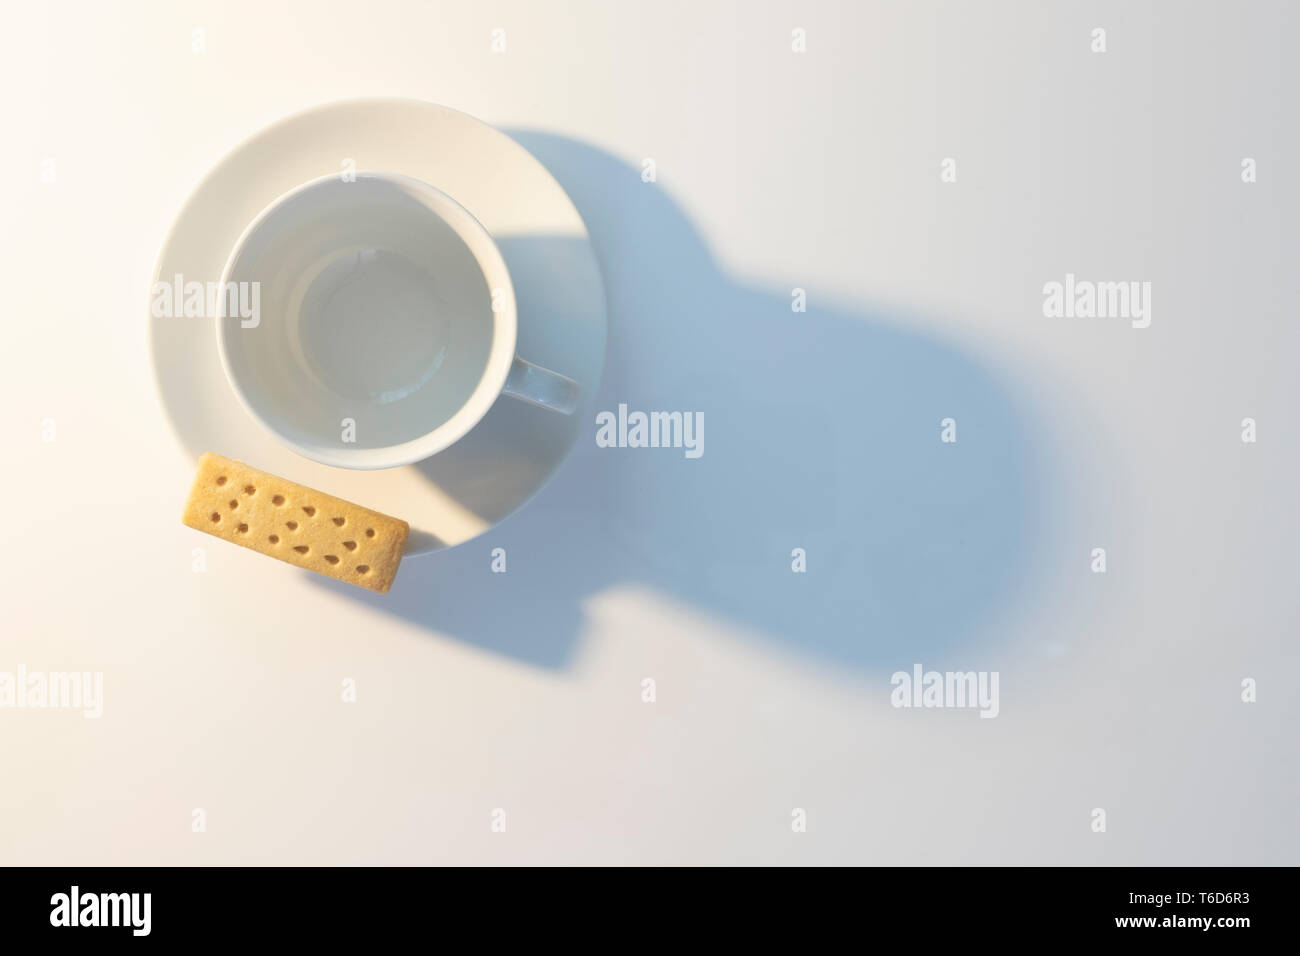 Kaffeetasse und negativen Raum Stockfoto